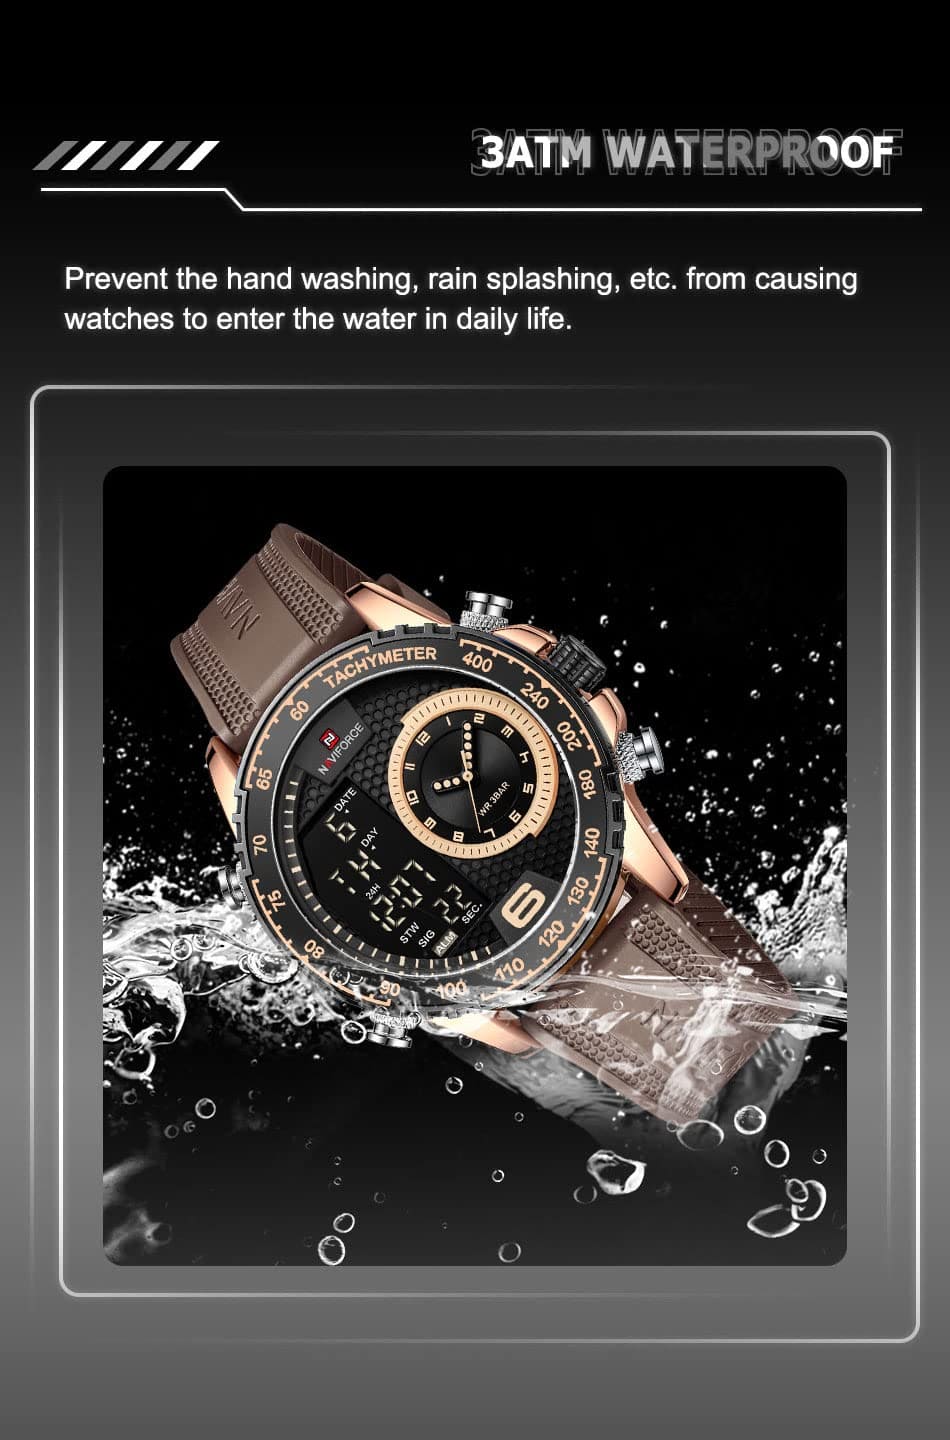 Naviforce Men's Watch NF9199T RG B CE | Watches Prime